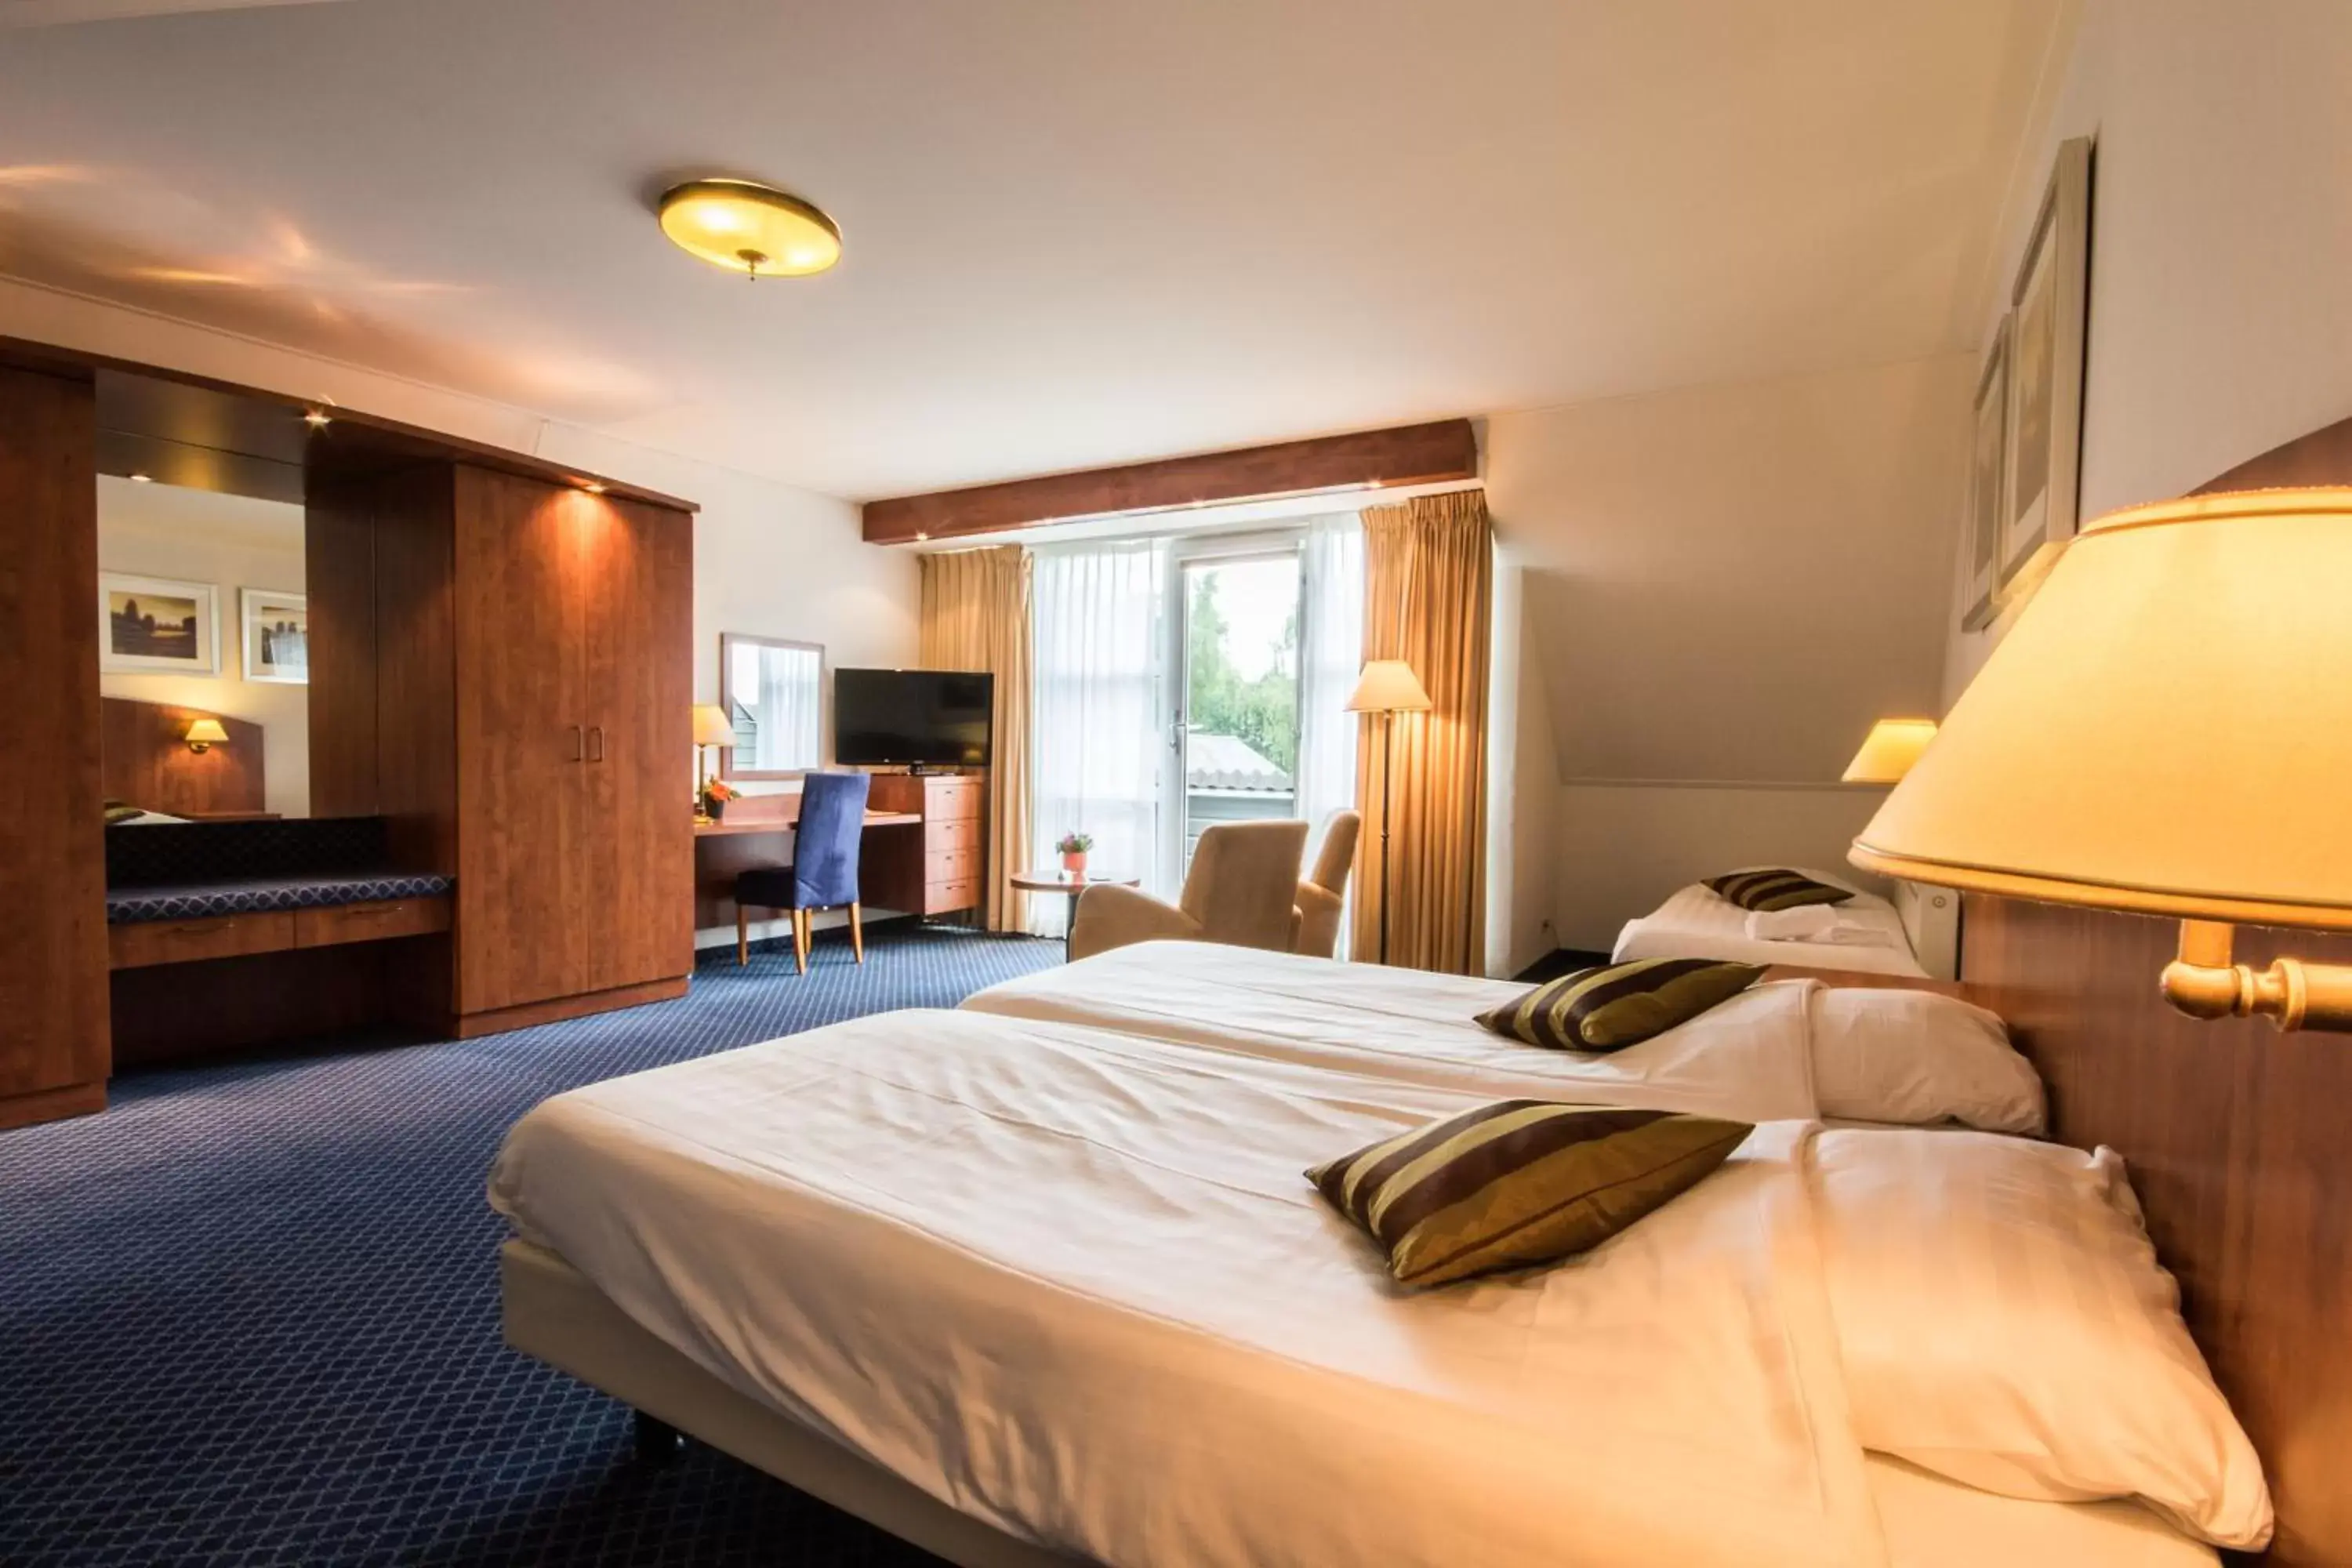 Day, Room Photo in De Stobbe hotel & suites